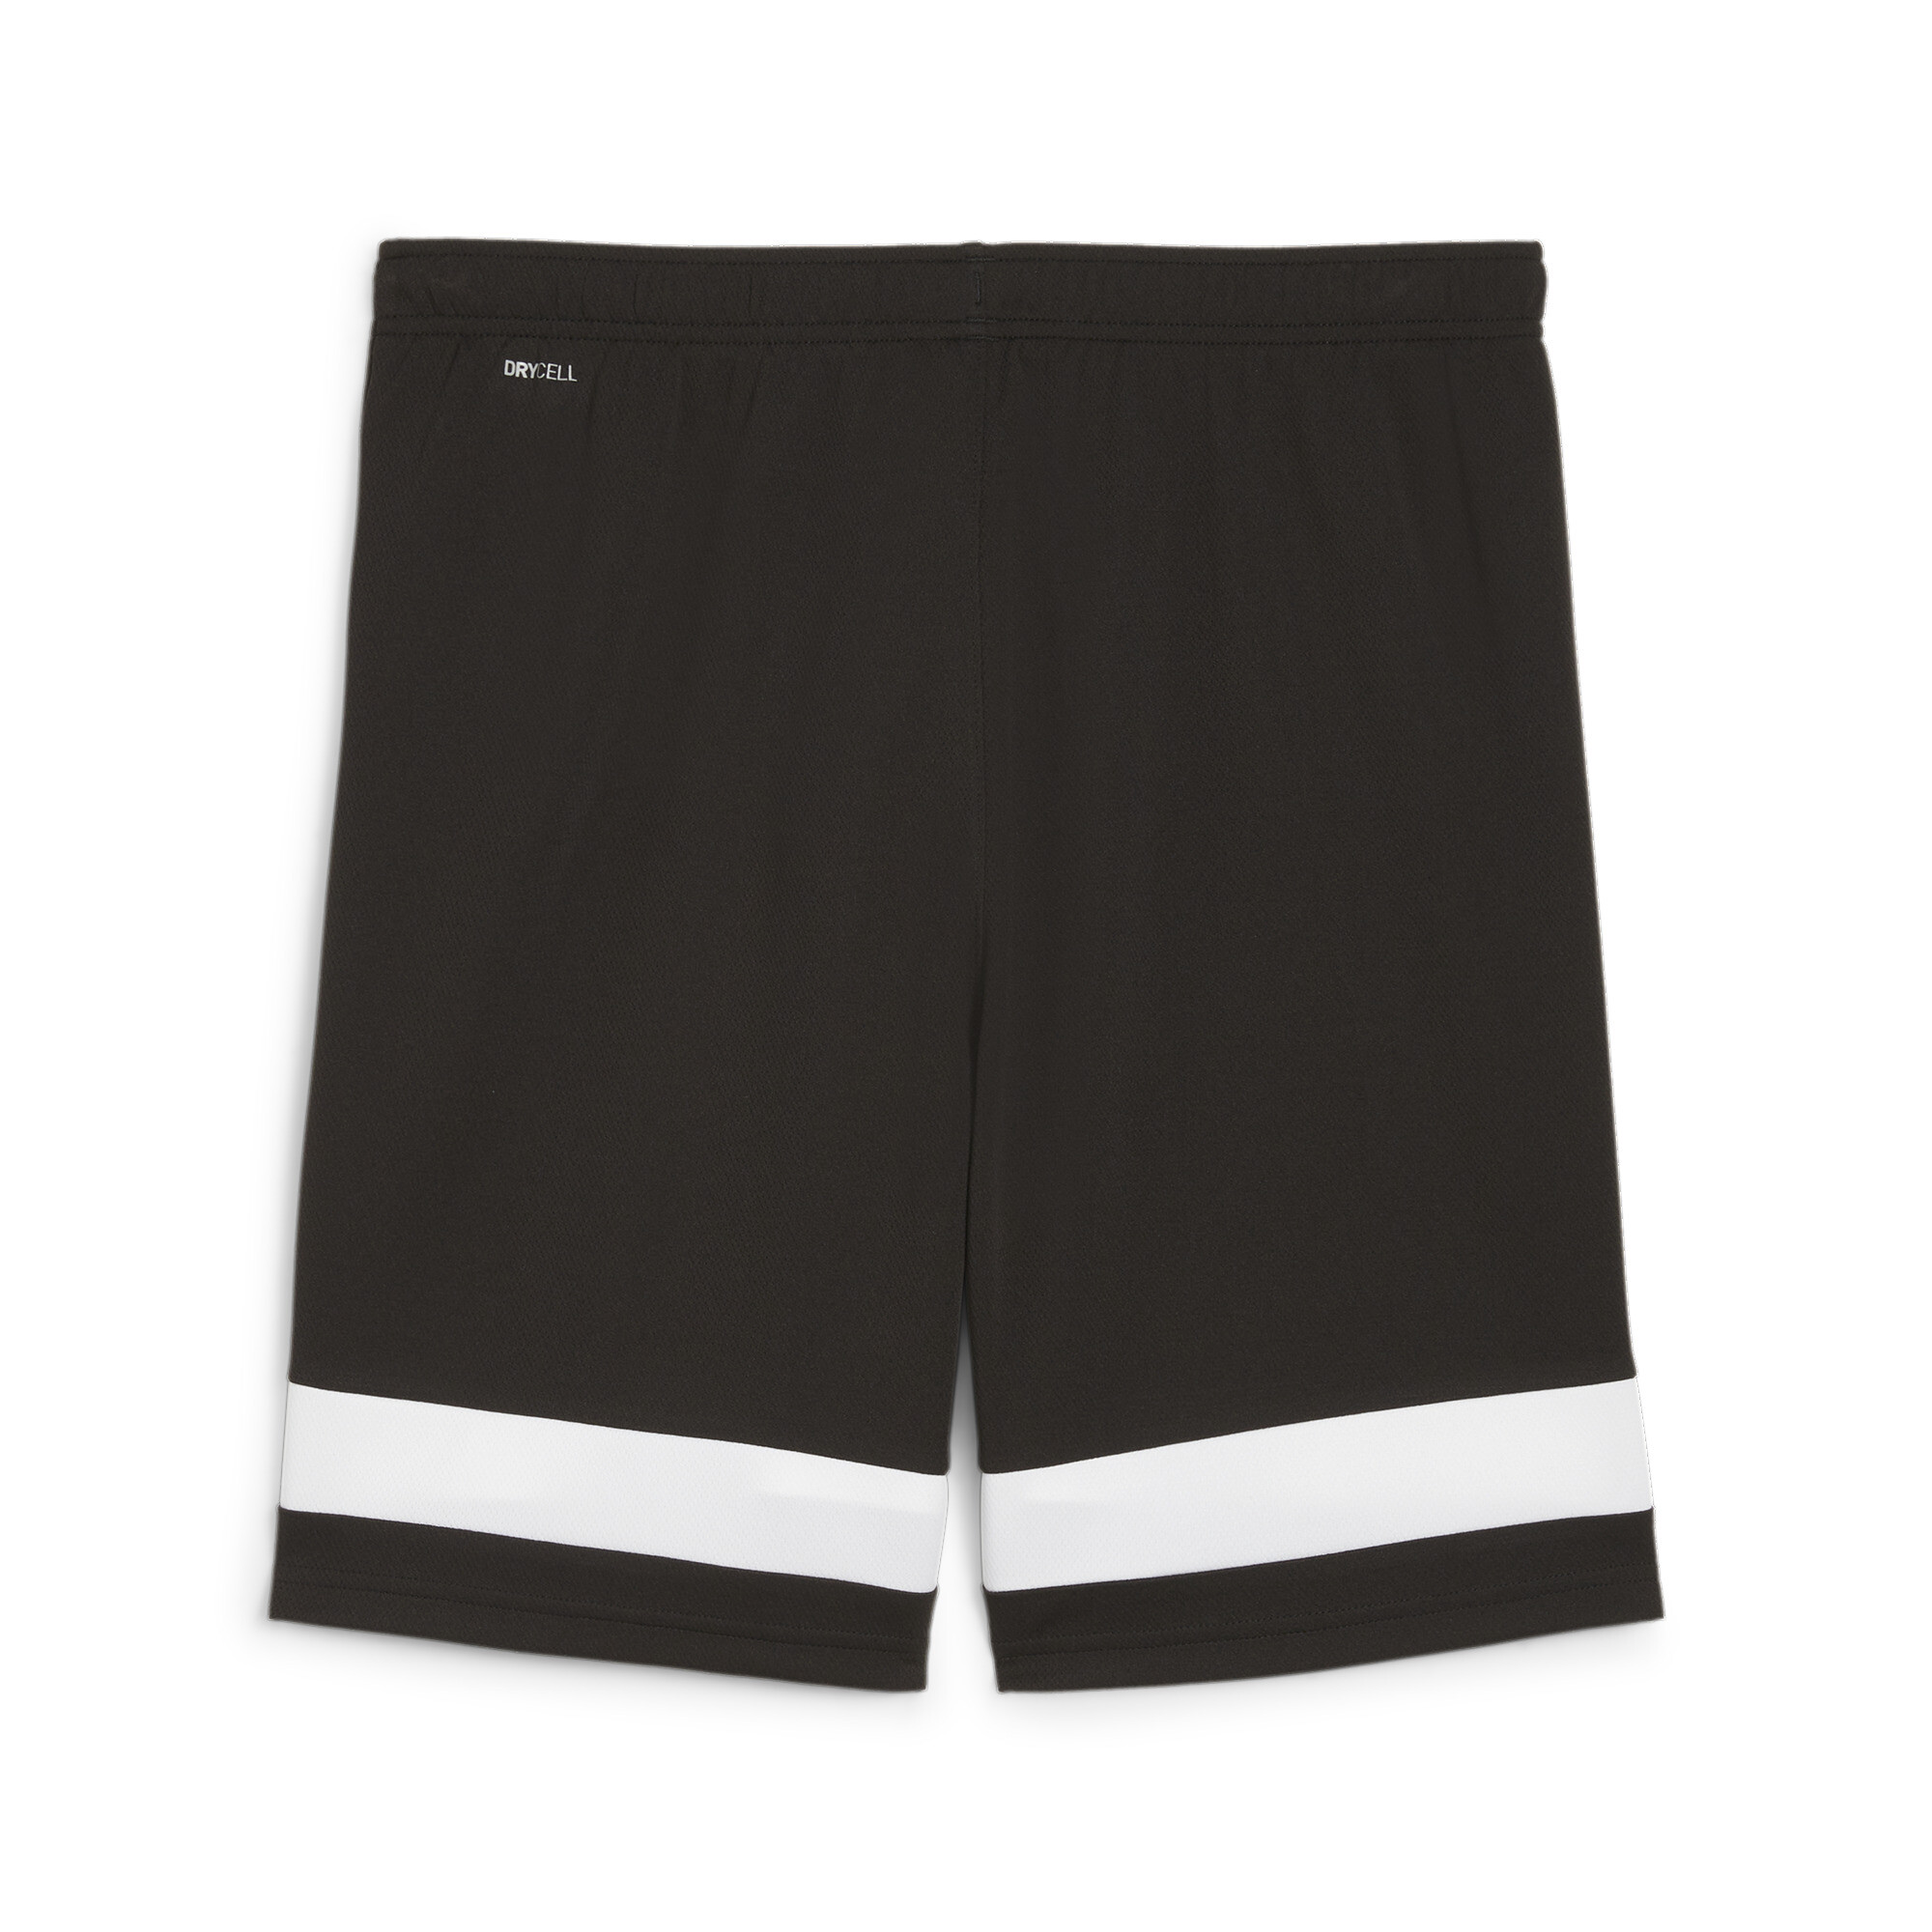 Men's PUMA IndividualRISE Football Shorts In Black, Size XS